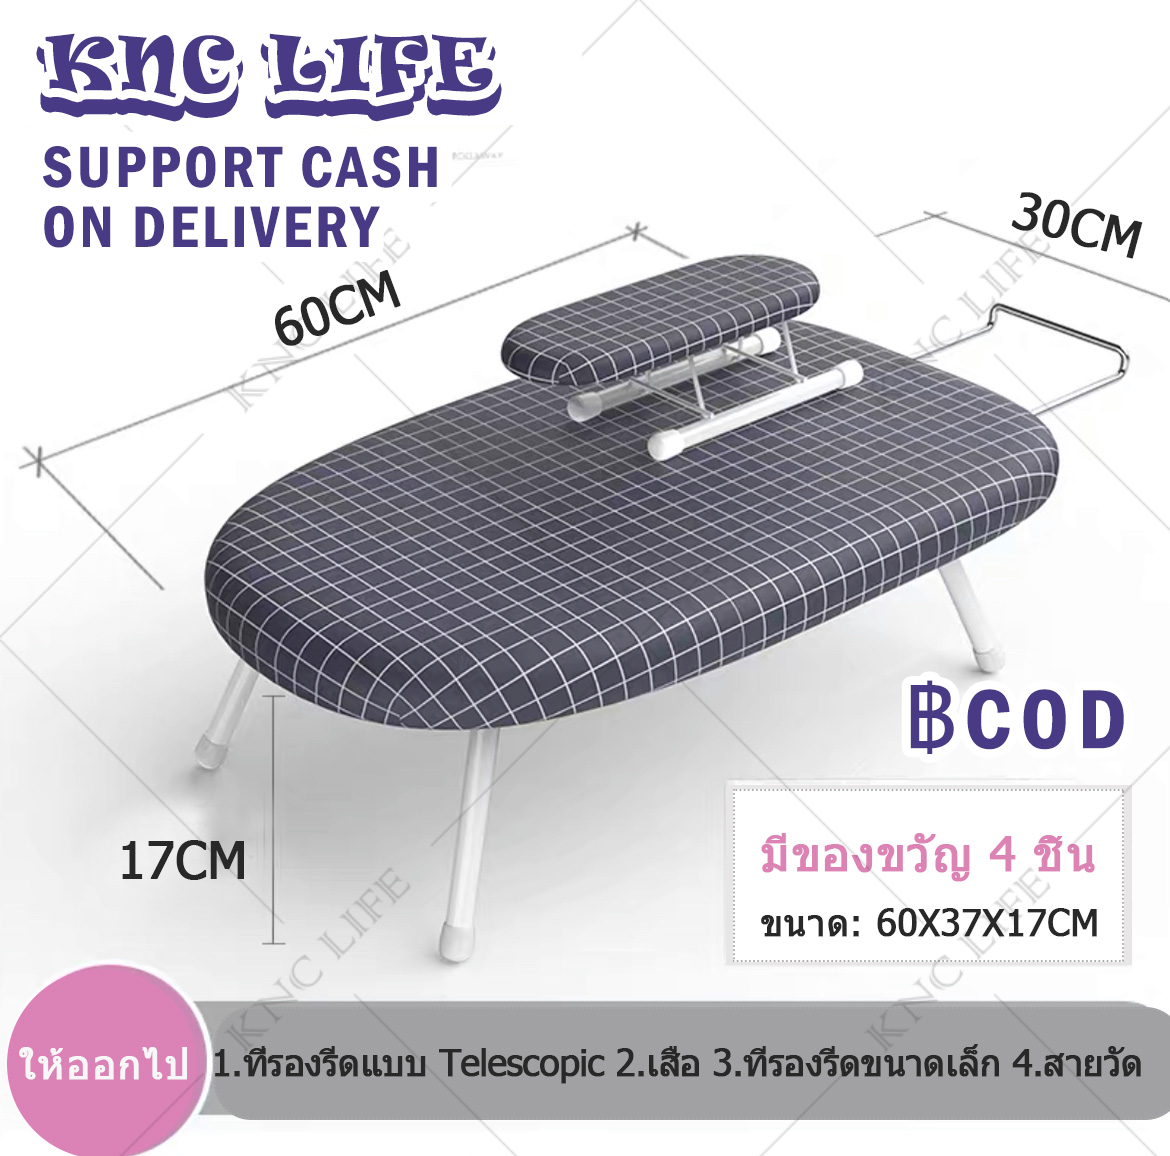 【KNC life อุปทานโดยตรงจากโรงงาน】โต๊ะรีดผ้ายืน  ที่รองรีด ที่รองรีด ที่รองรีดในครัวเรือน ที่รองรีด ที่รองรีดคุณภาพสูง ที่รองรีด ขนาดใหญ่ โต๊ะรีด